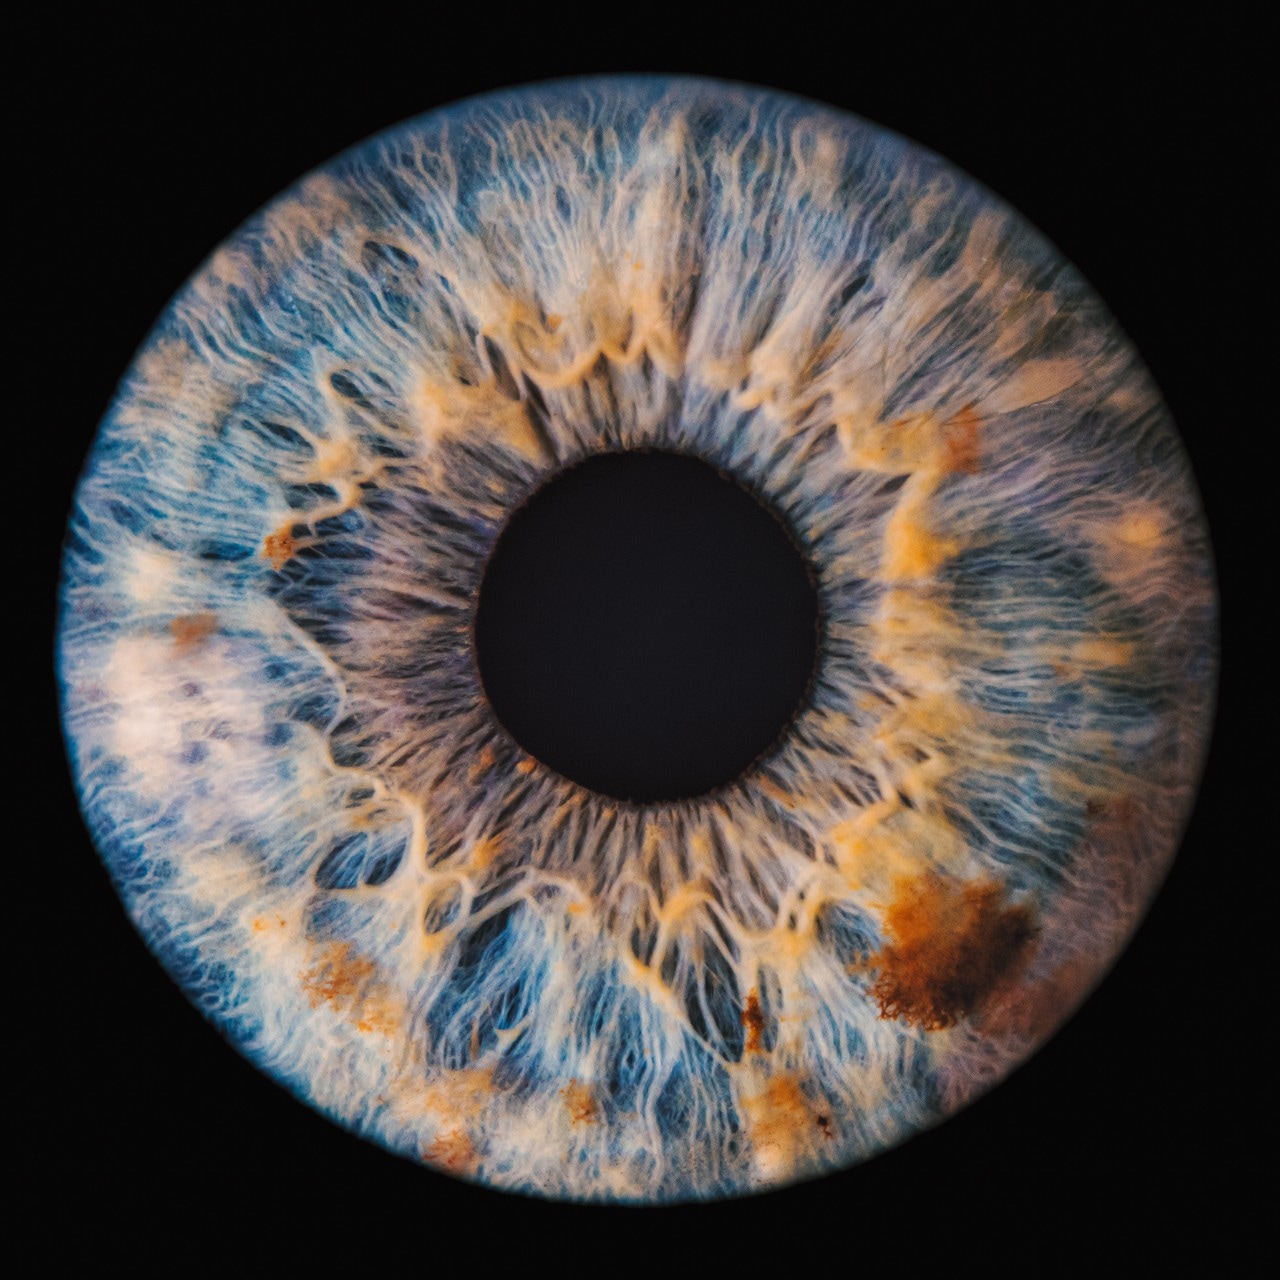 A close-up image of a human eye